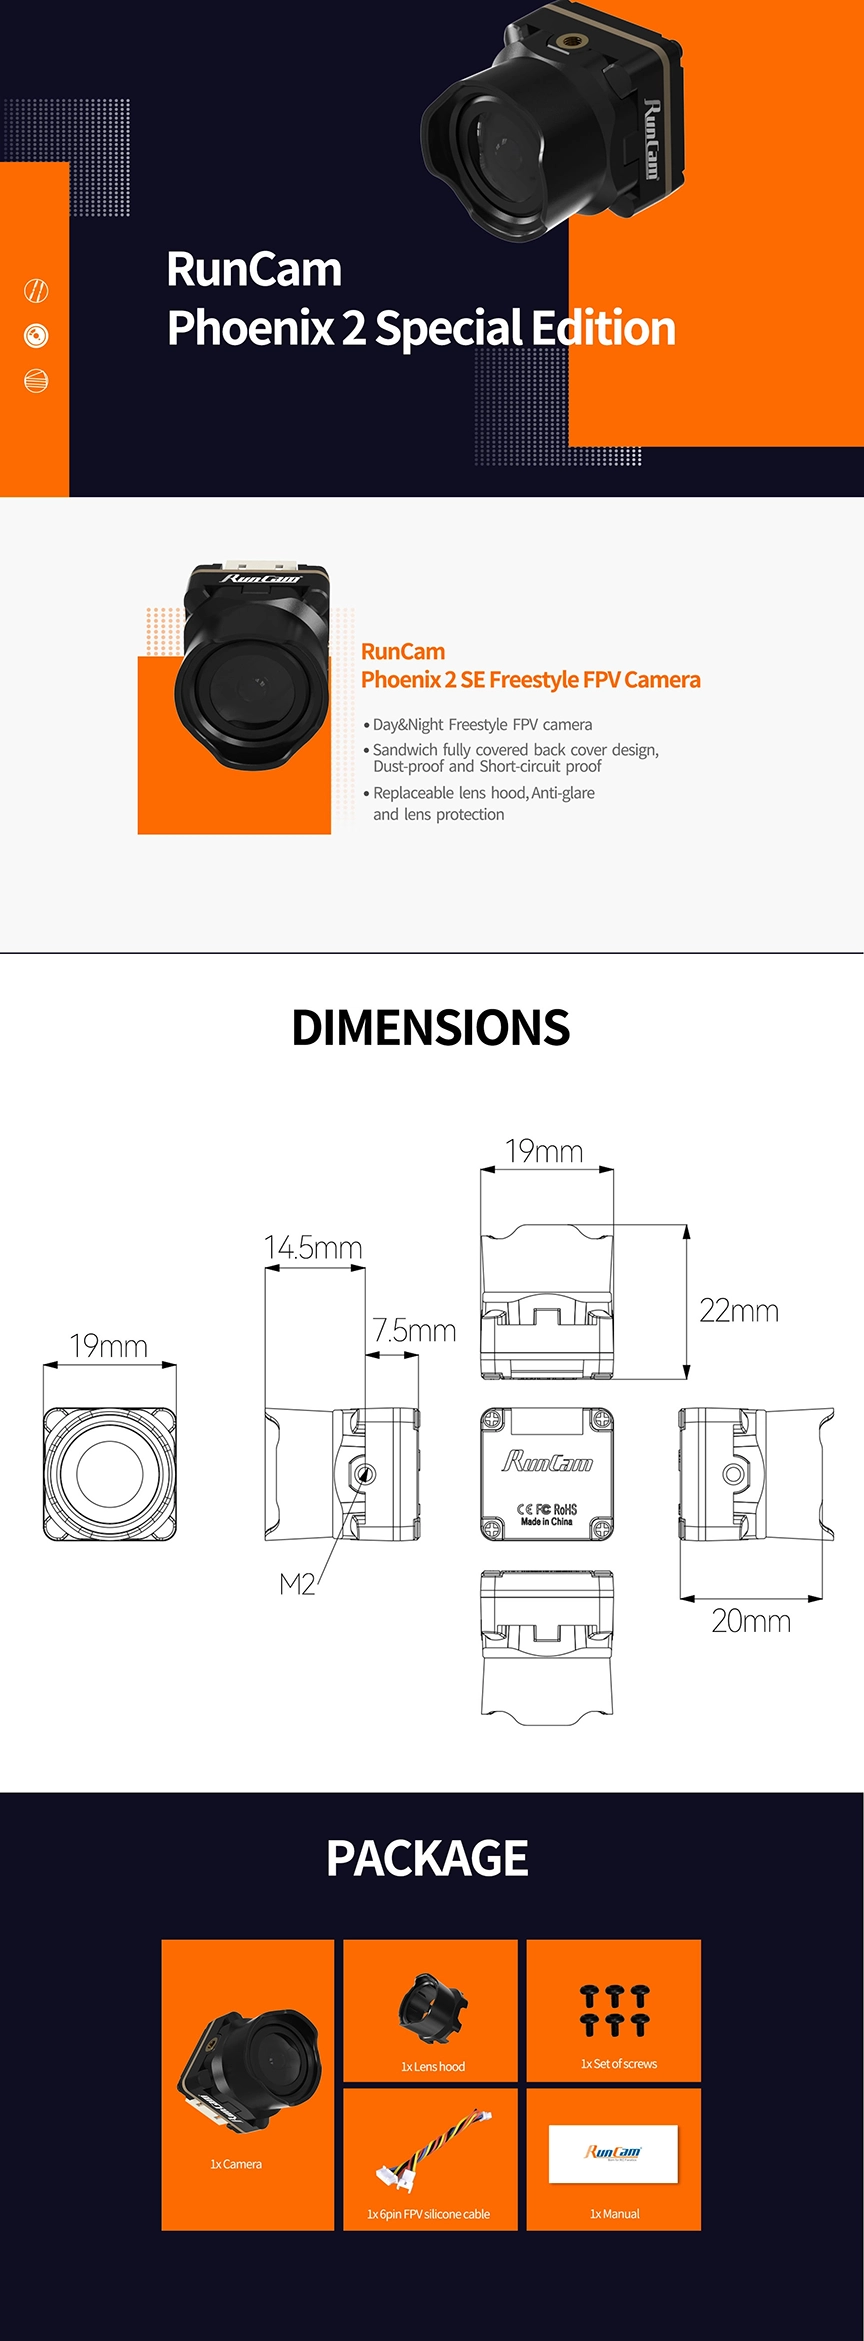 RunCam Phoenix 2 FPV Camera - Special Edition Infographic